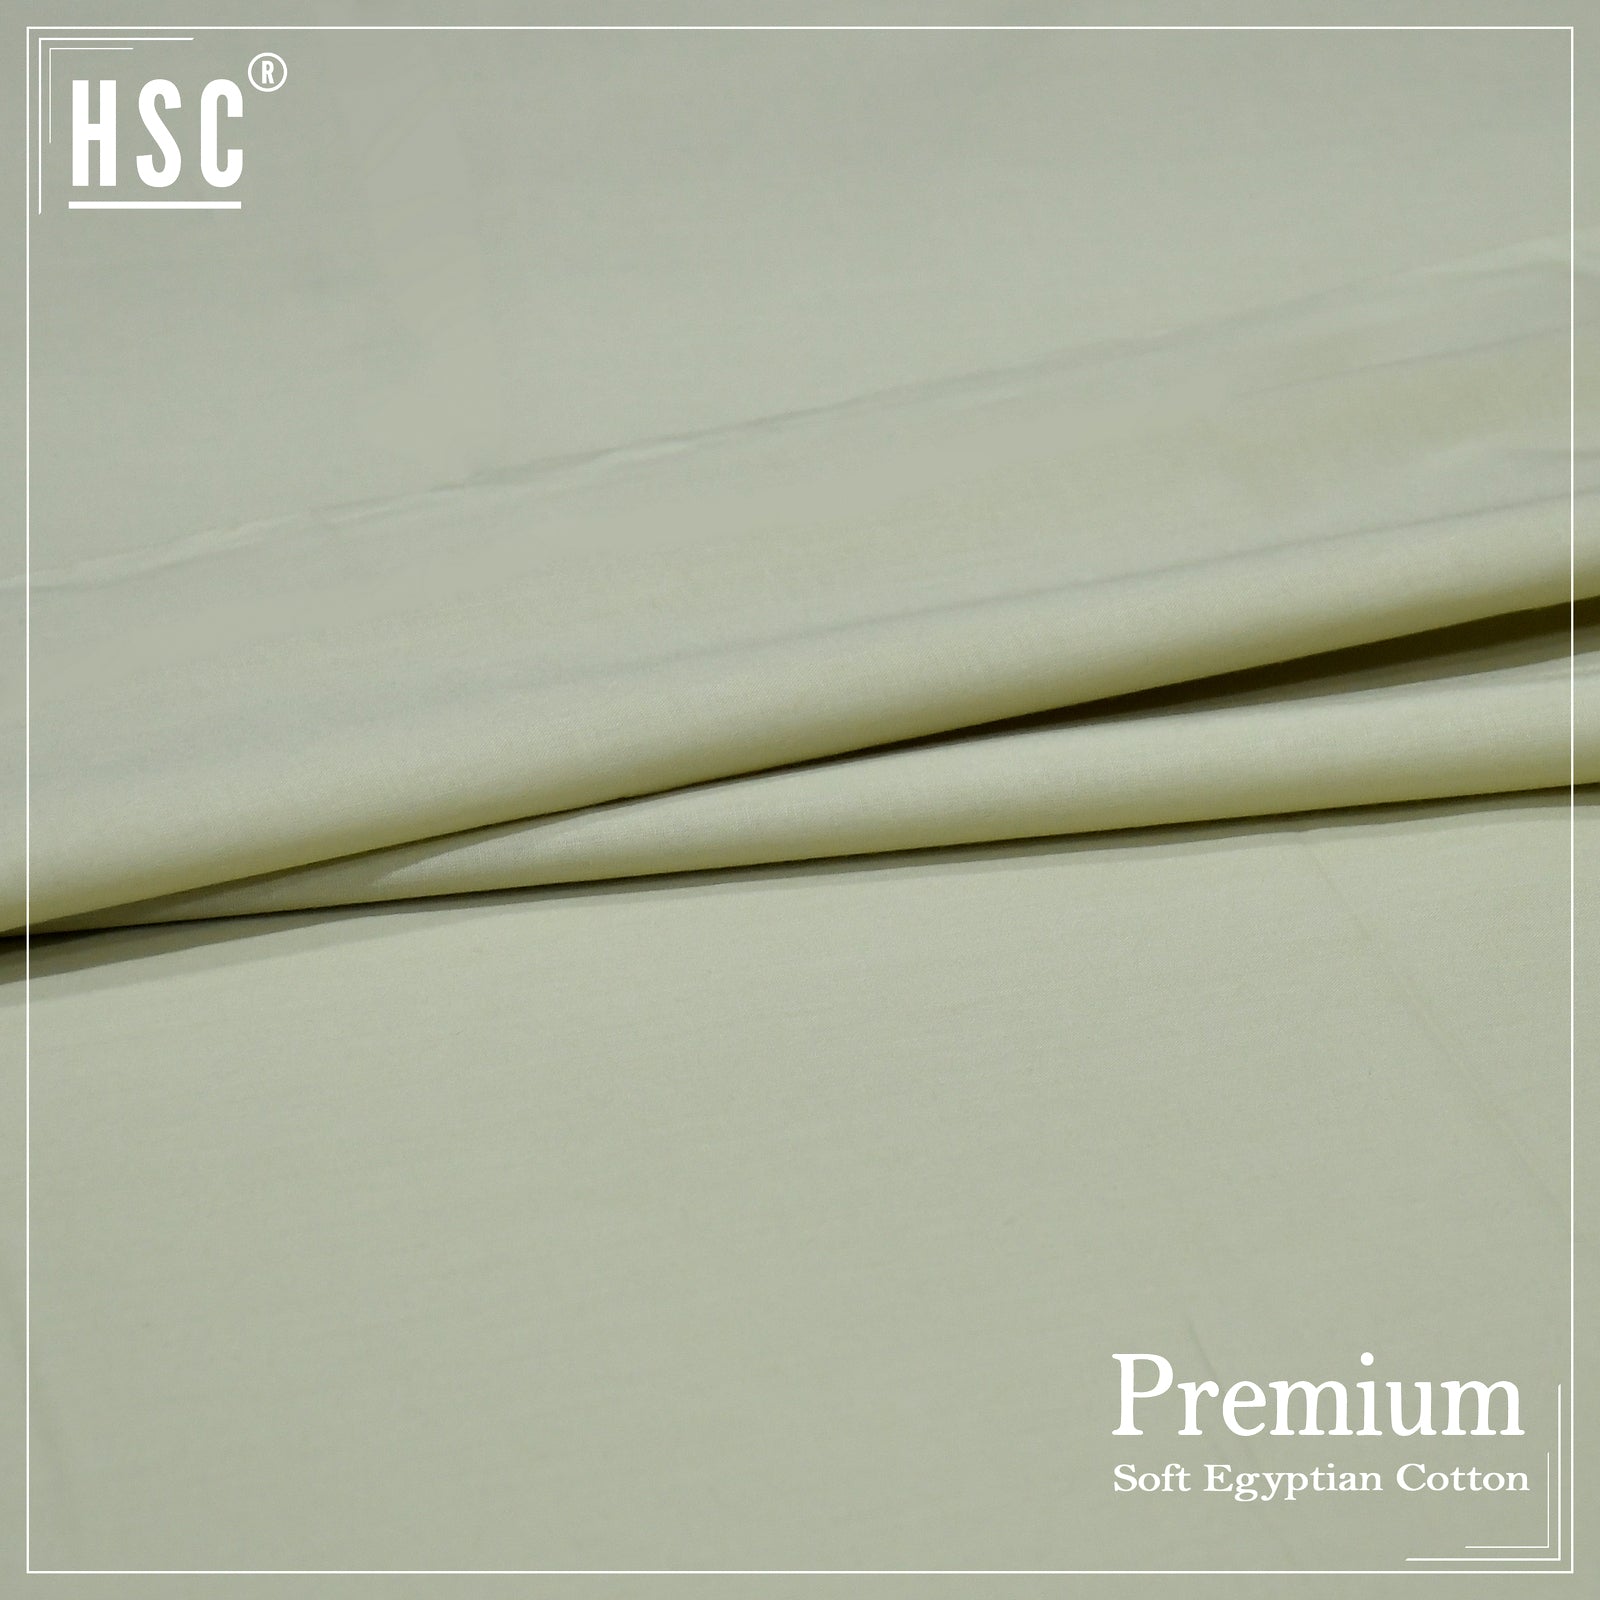 Premium Soft Egyptian Cotton - SCT4 HSC